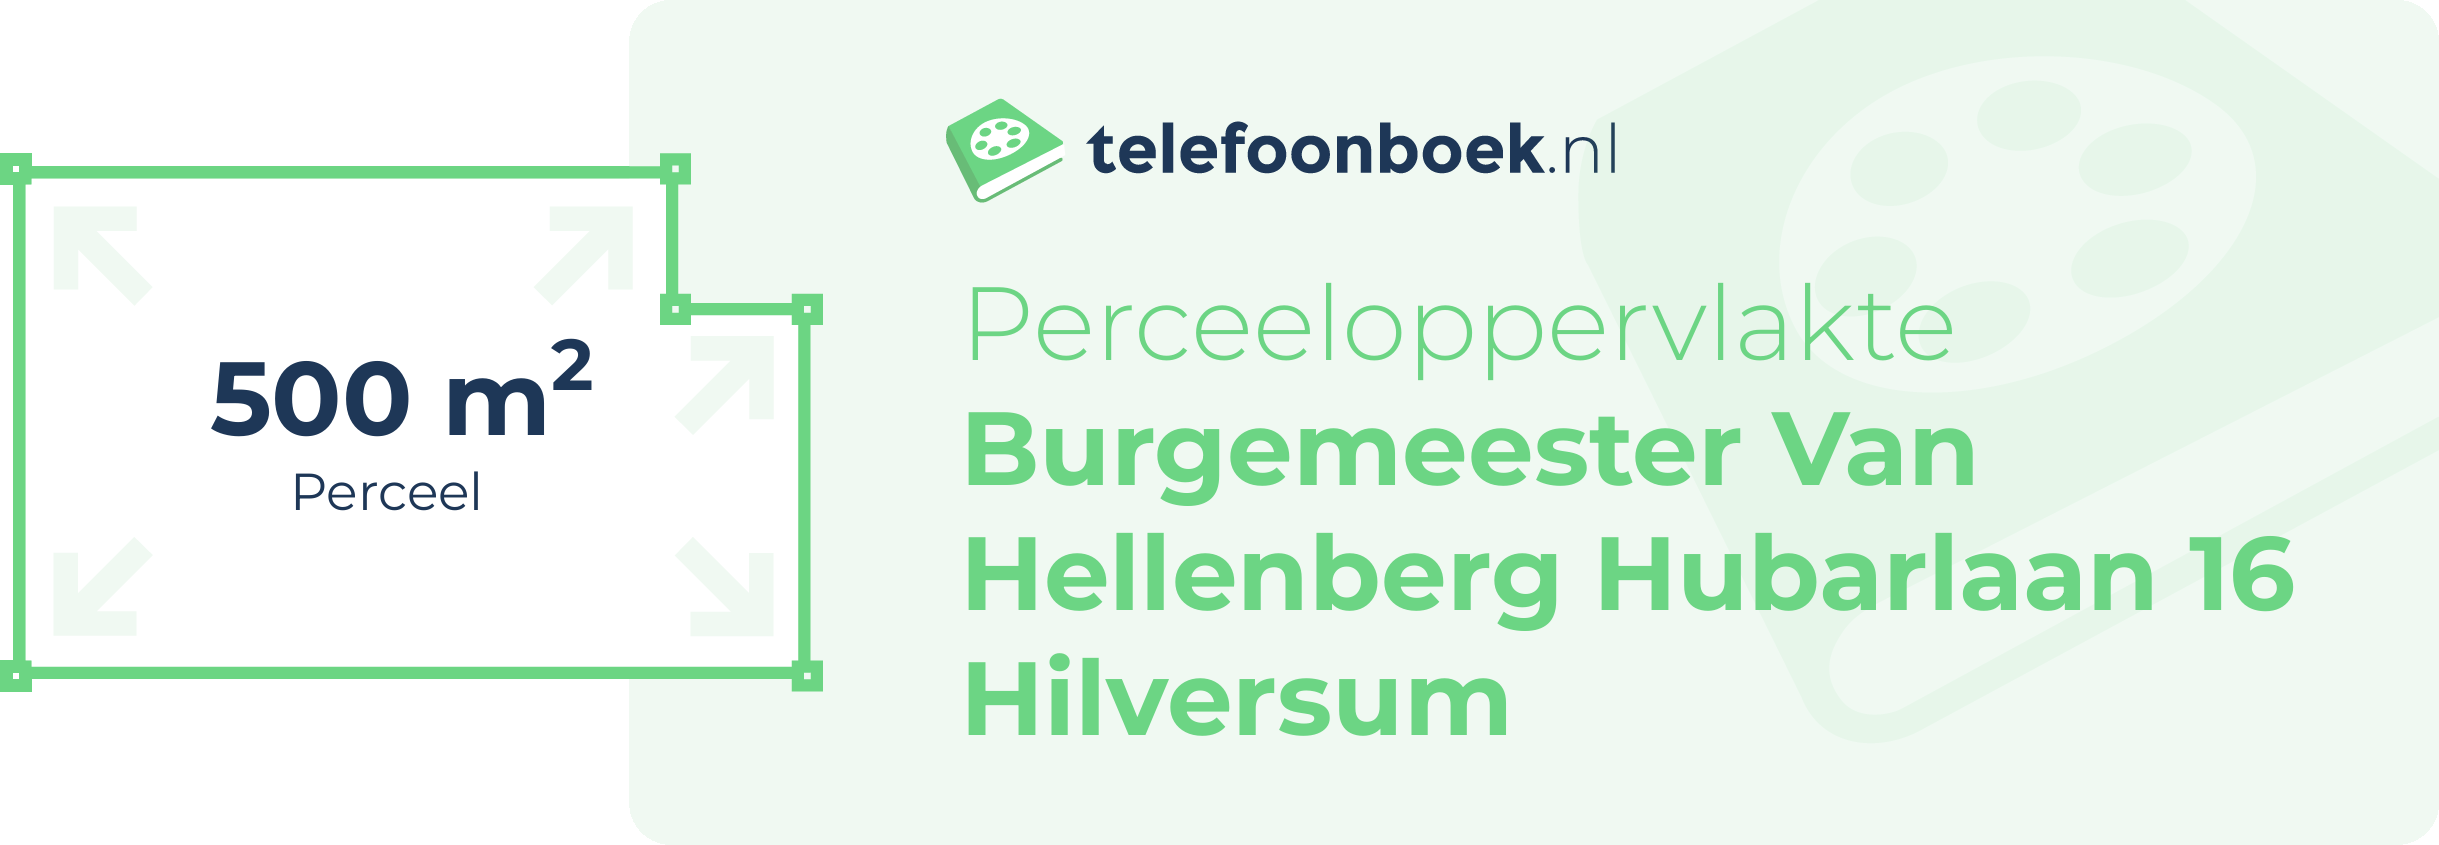 Perceeloppervlakte Burgemeester Van Hellenberg Hubarlaan 16 Hilversum